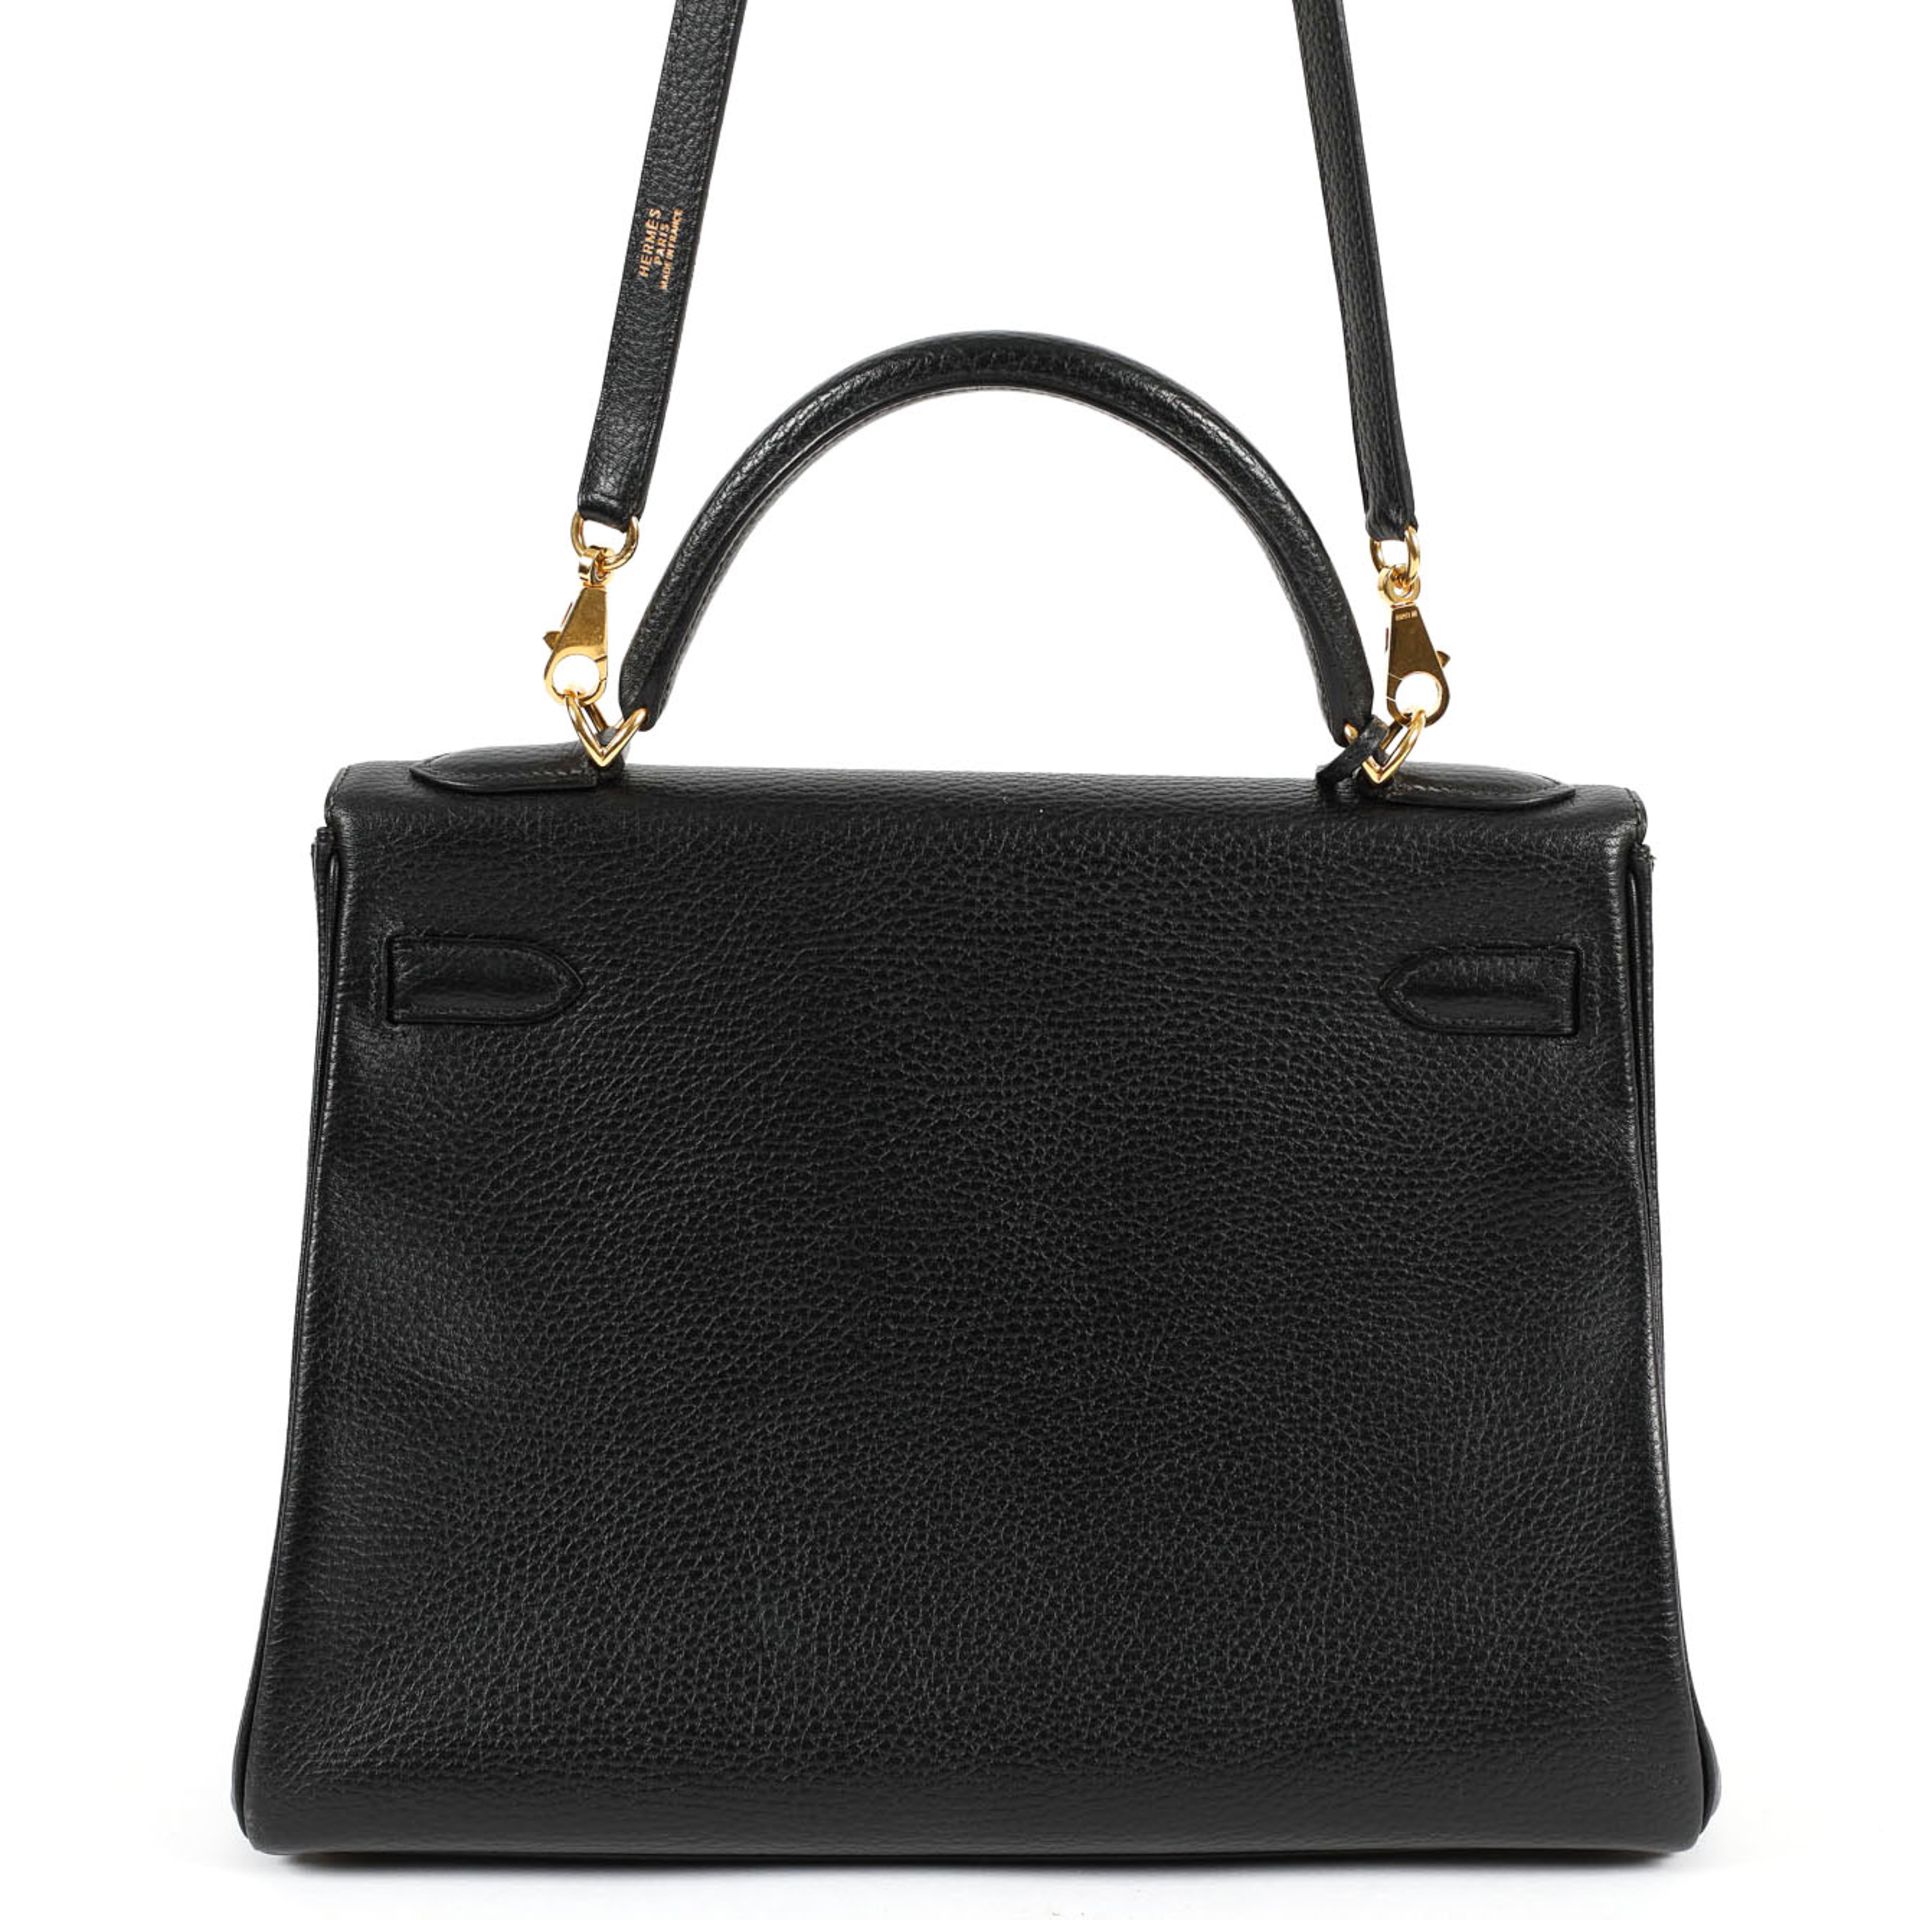 "Kelly 32 Sellier" - Hermès bag, Togo leather, colour Black Ardennes, for women - Bild 6 aus 8